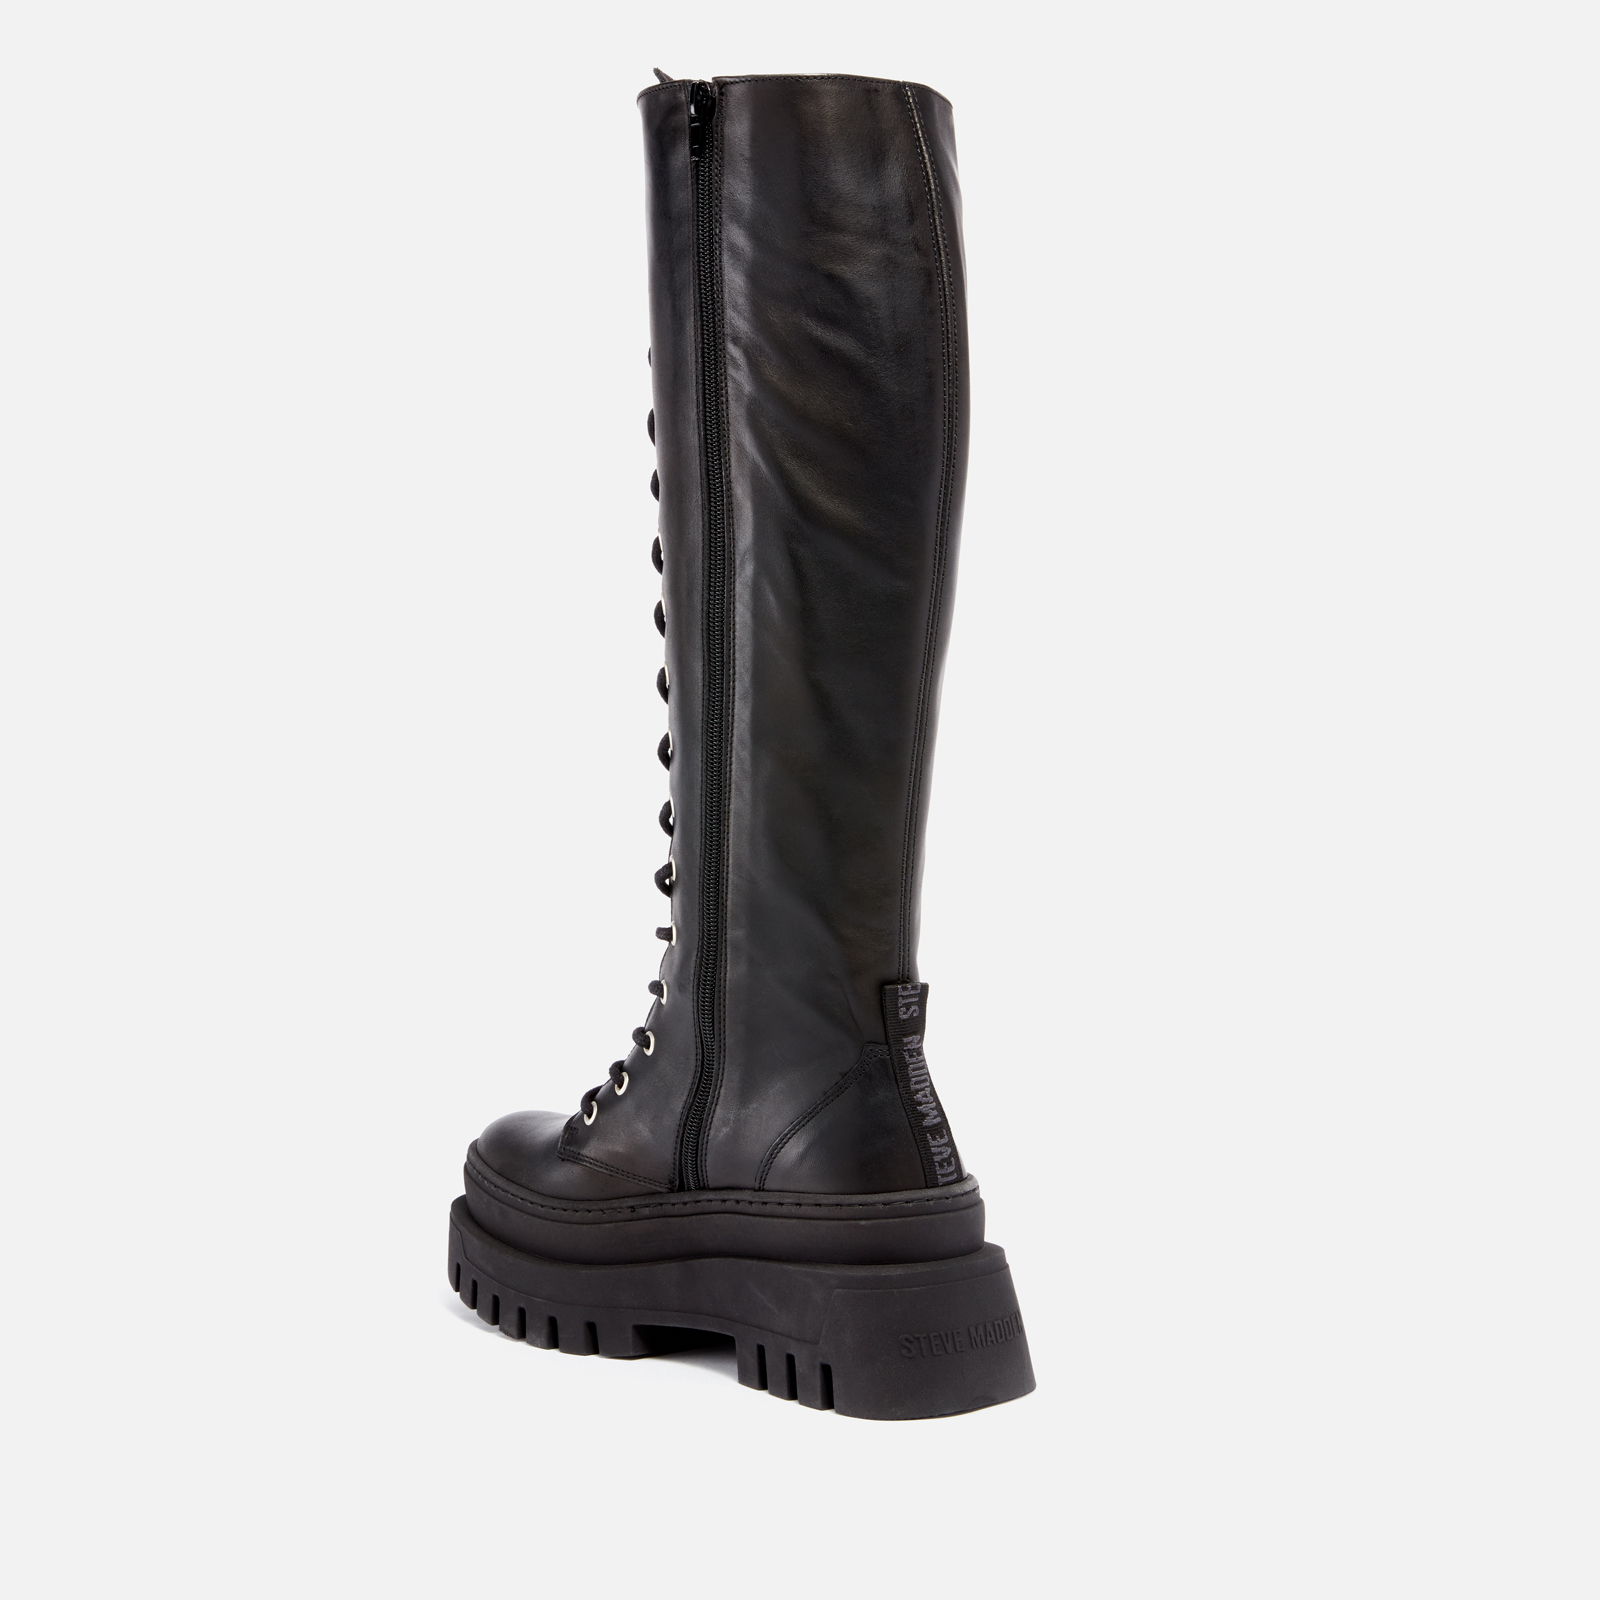 Steve Madden Women's Carina Leather Knee-High Boots | Allsole